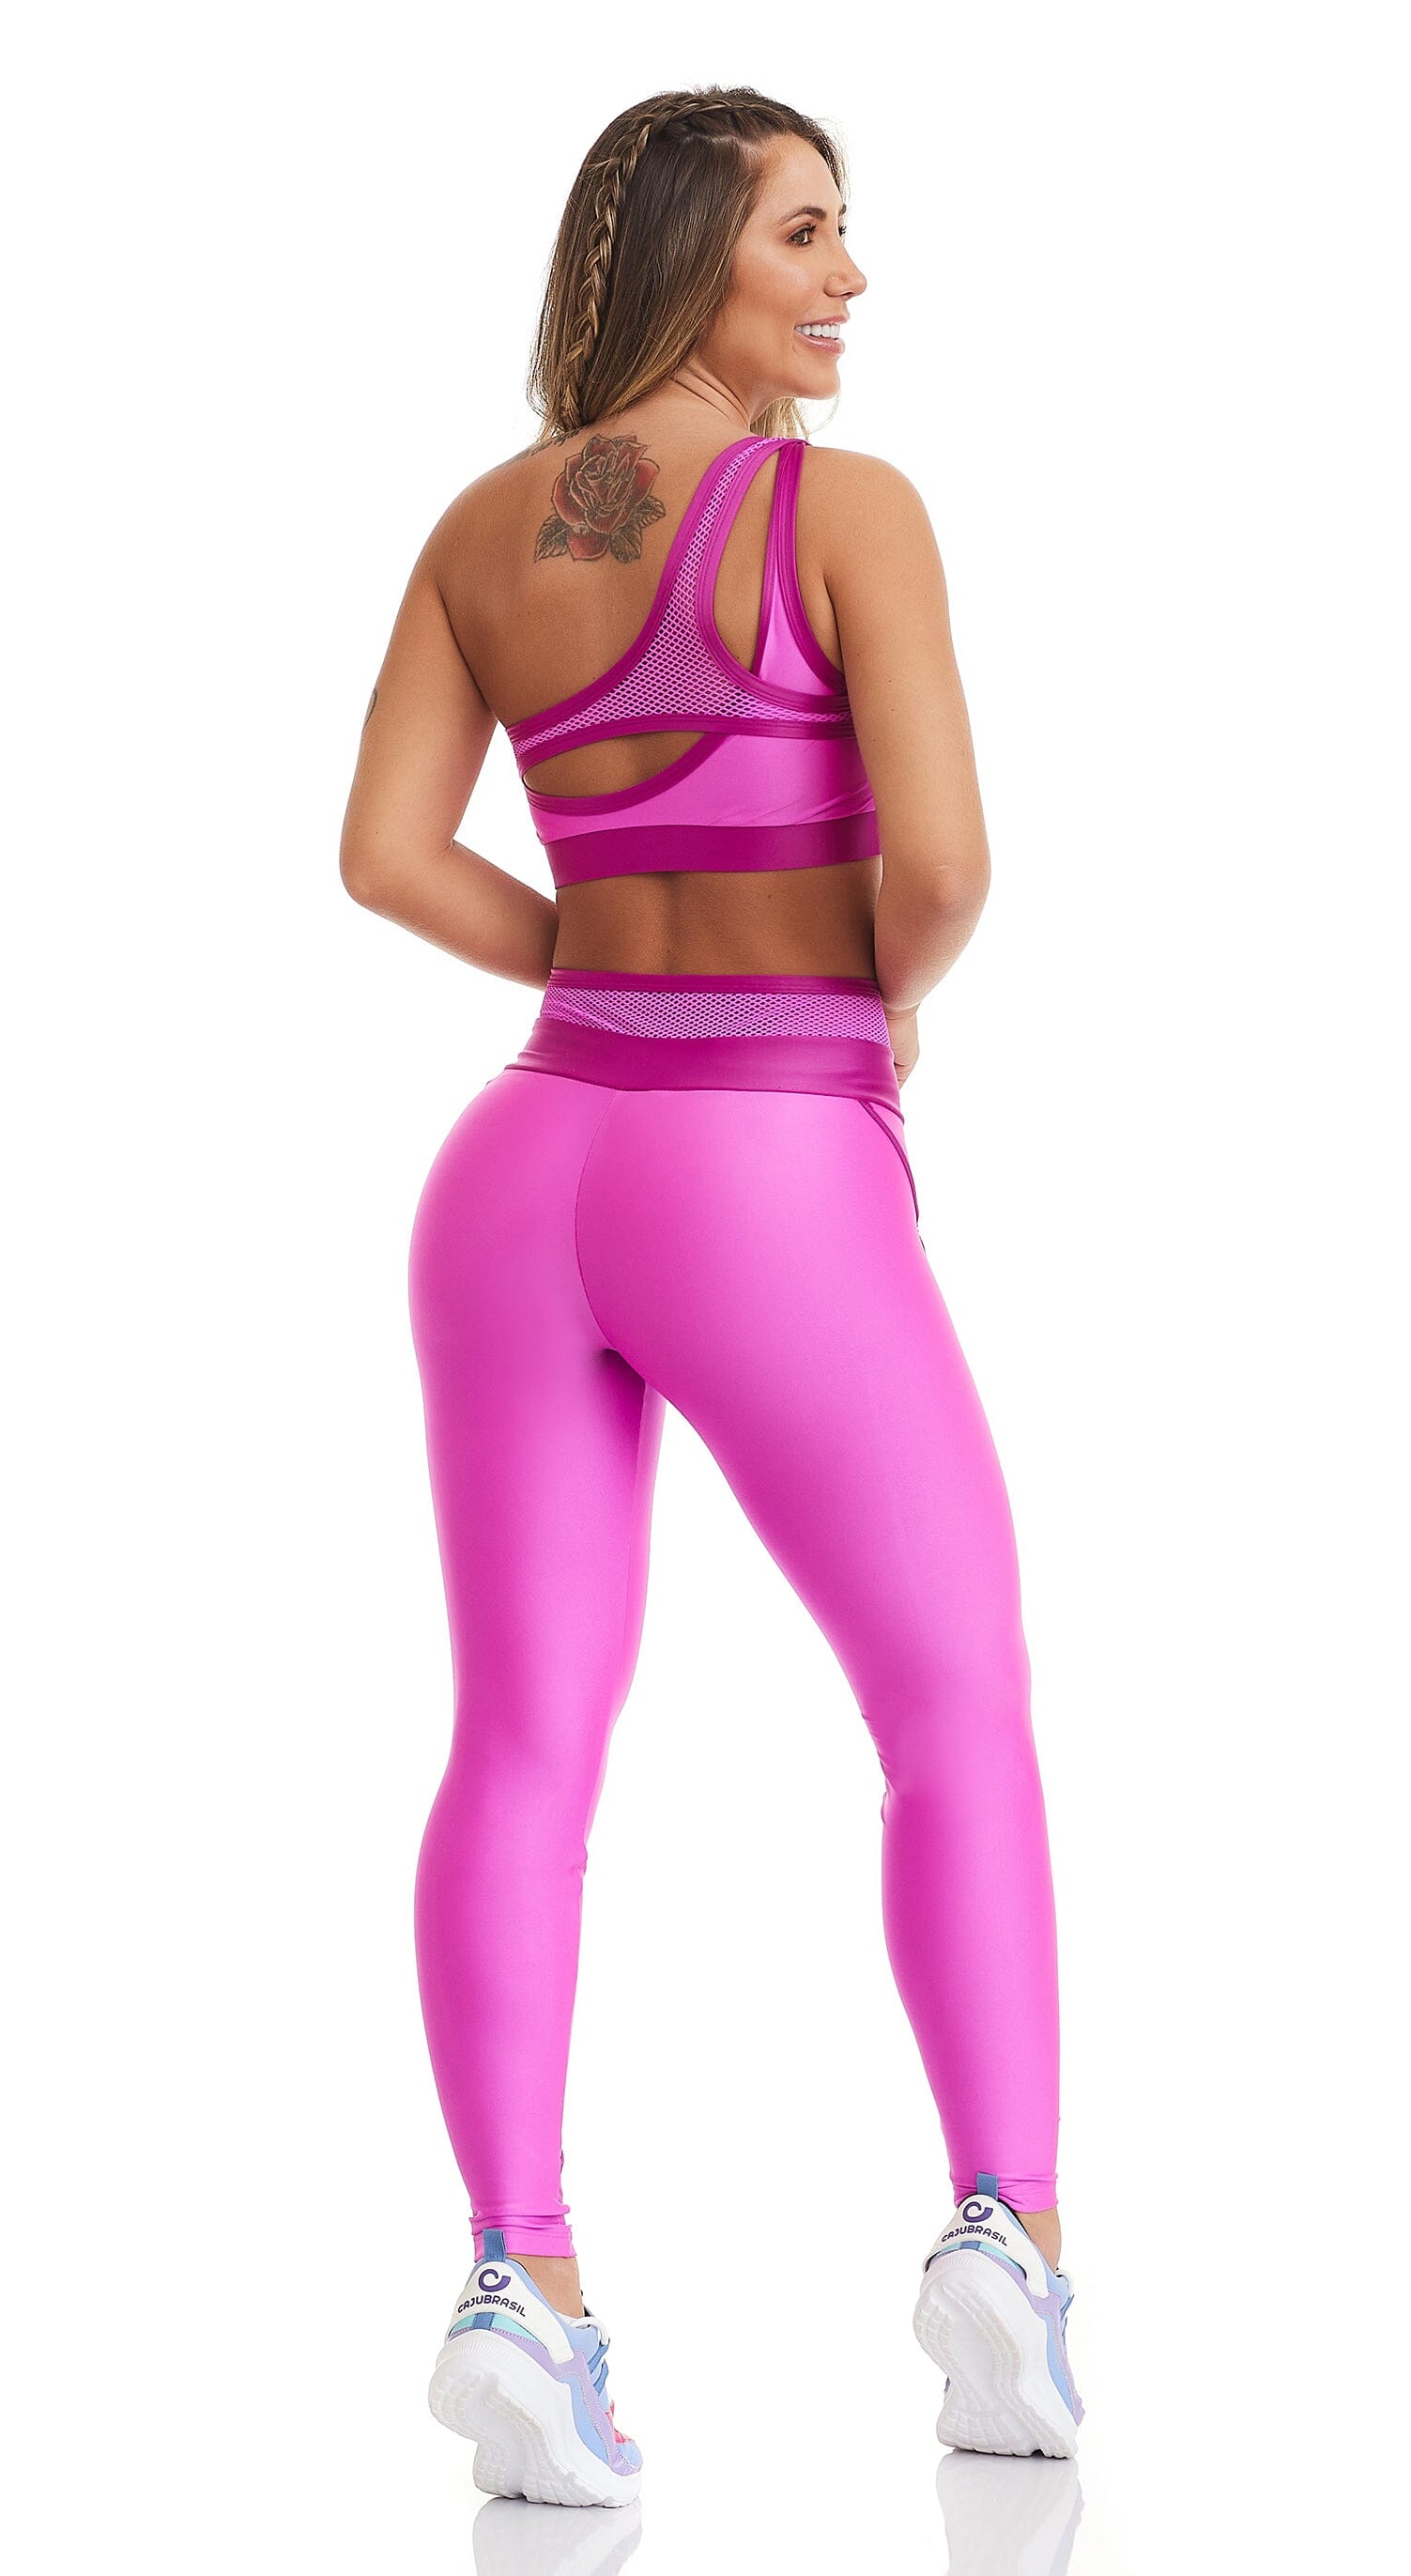 Atletika Hue Legging - Pink